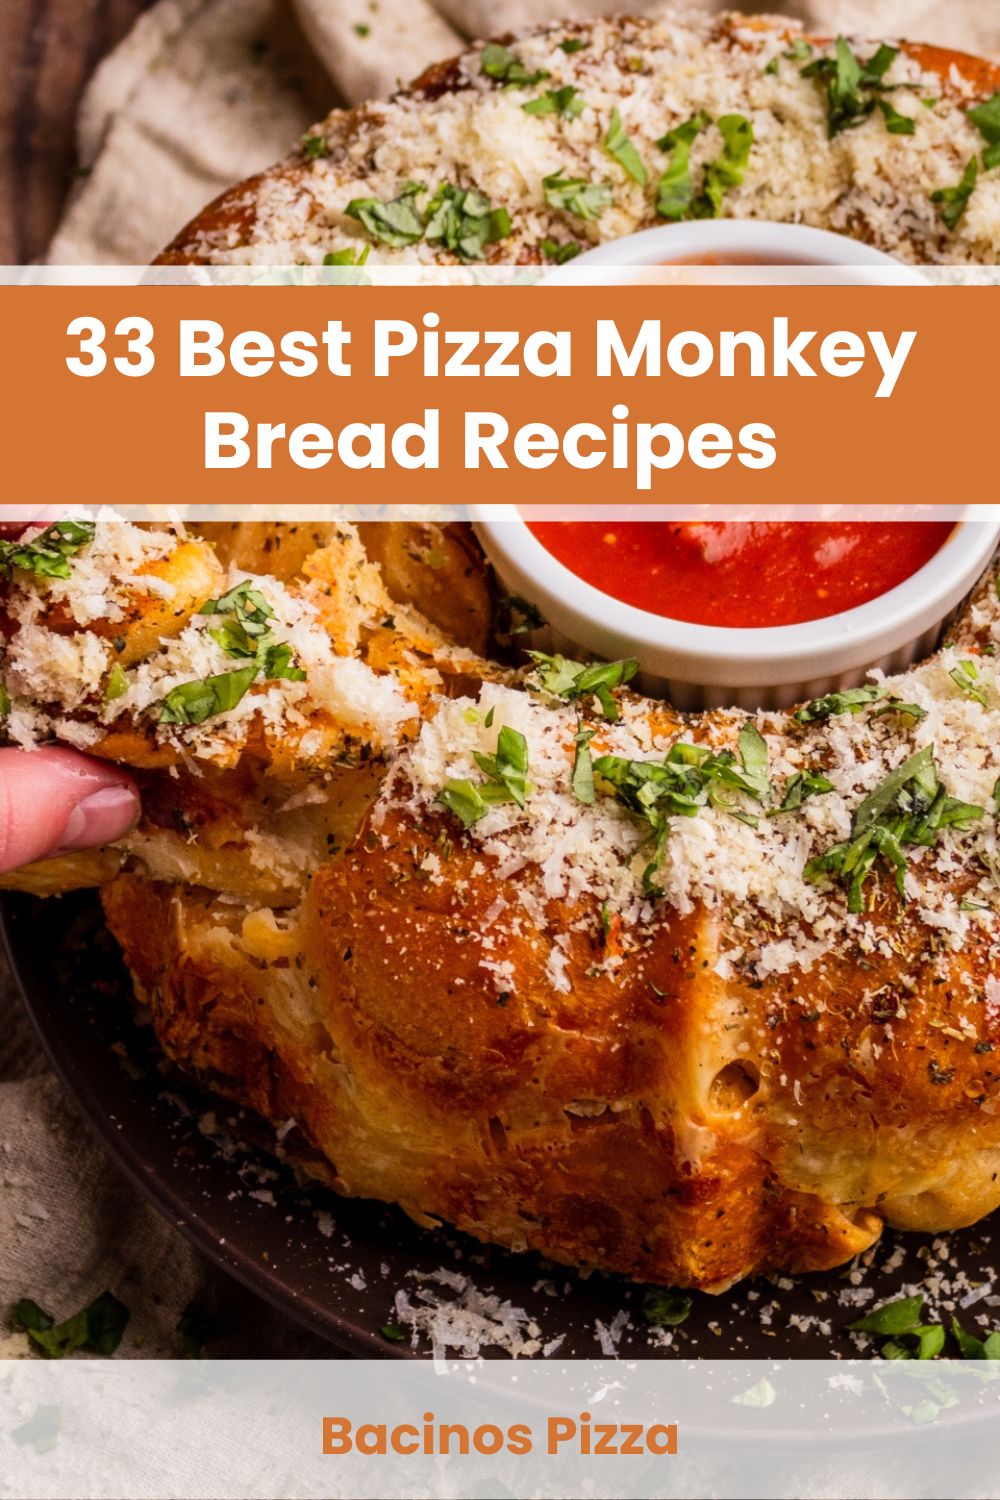 Best Pizza Monkey Bread Recipes